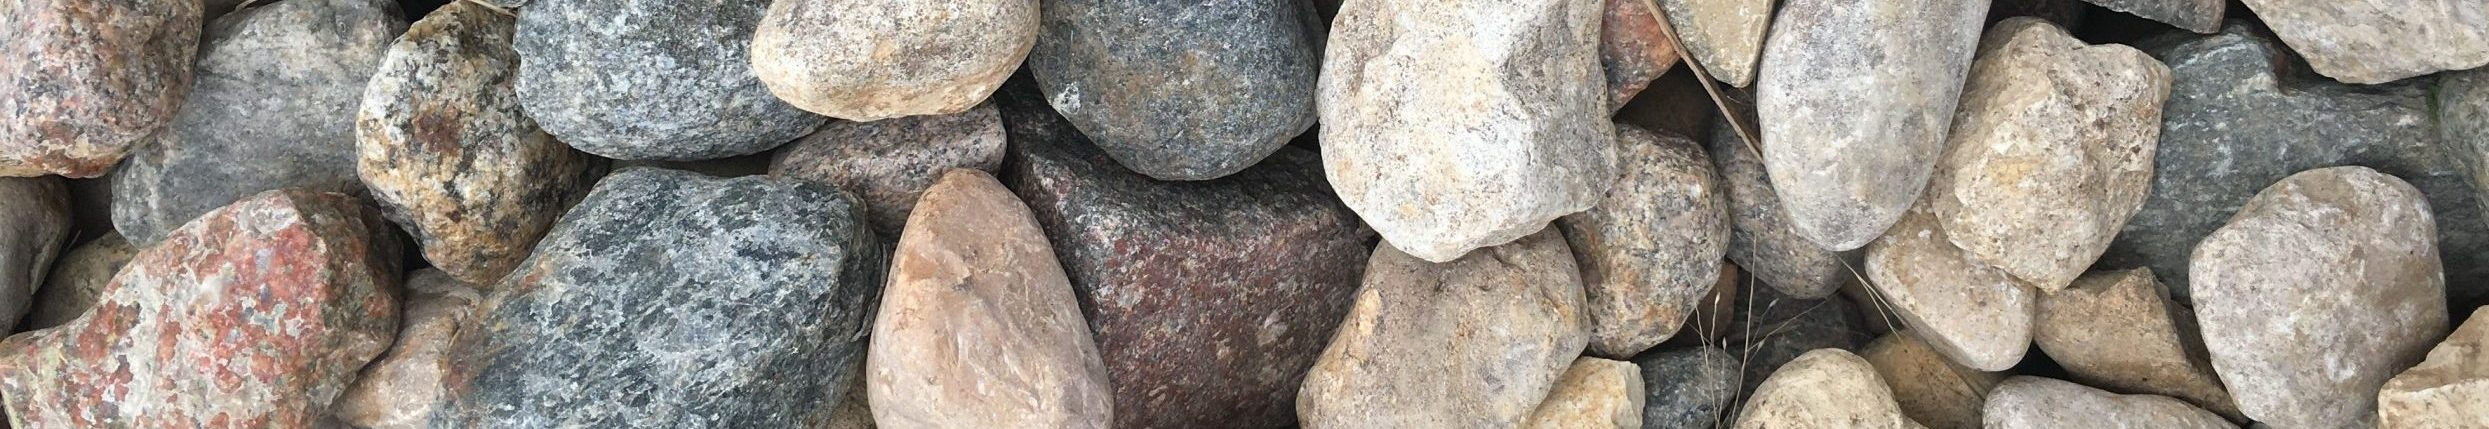 a pile of multi colored rocks